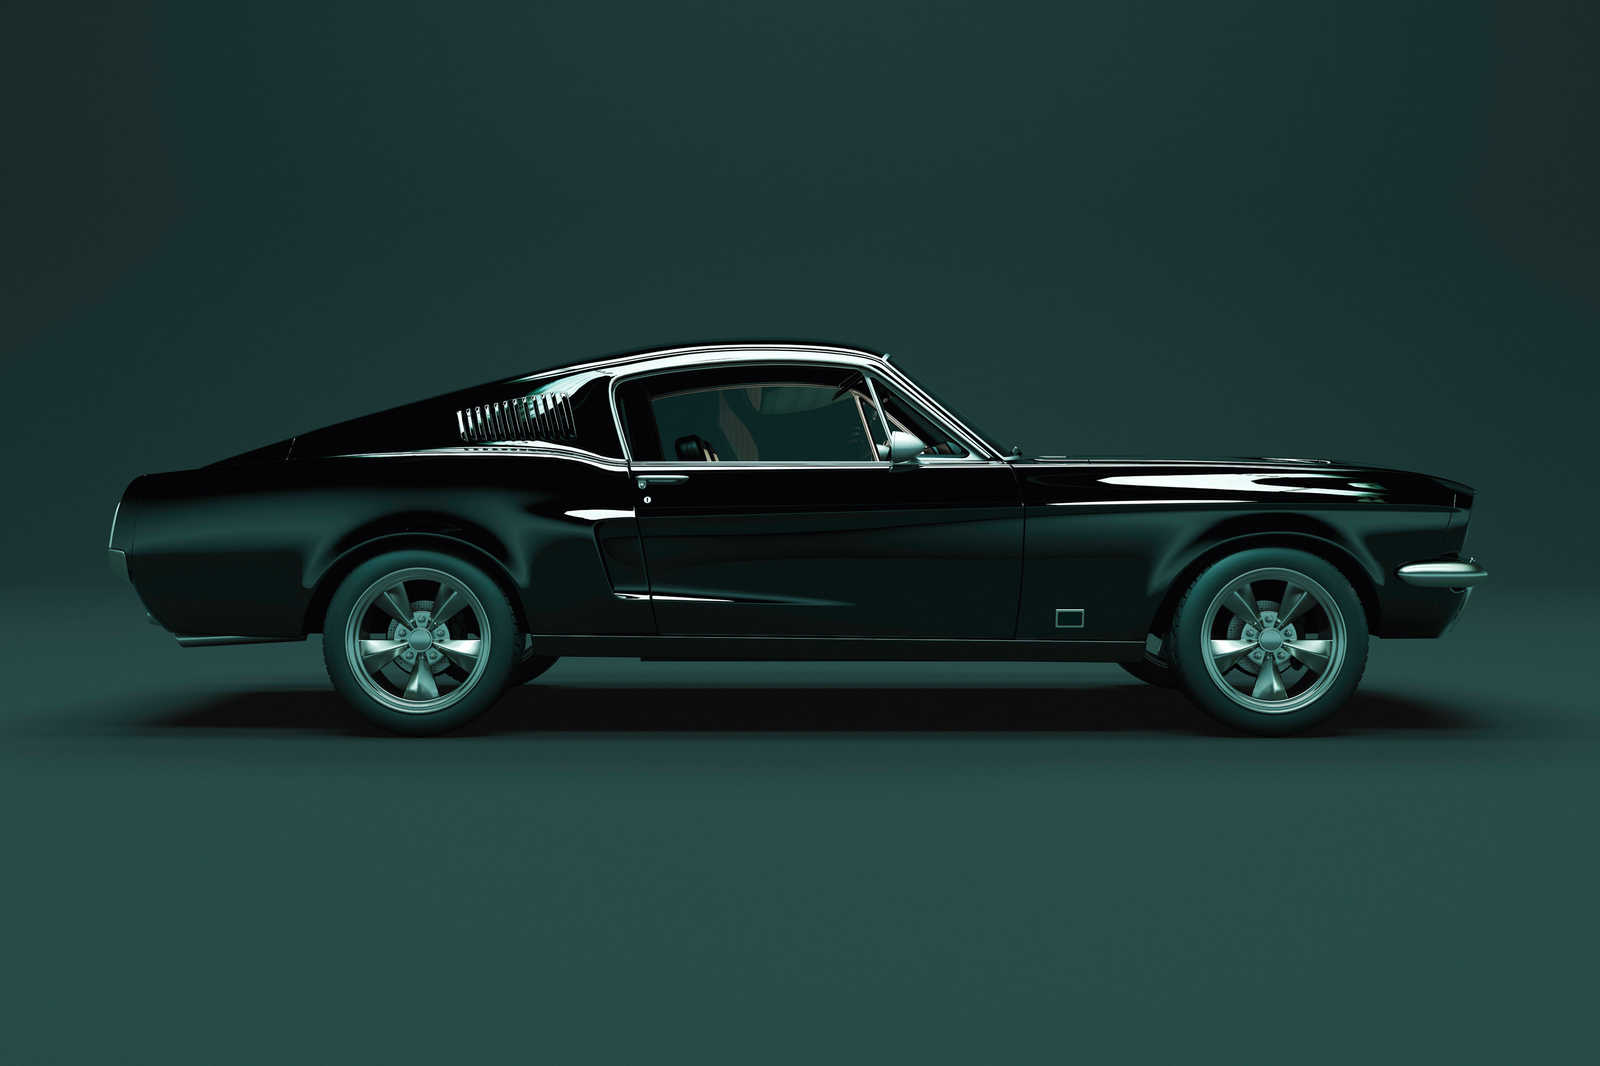             Mustang 1 - Quadro su tela, vista laterale Mustang, vintage - 0,90 m x 0,60 m
        